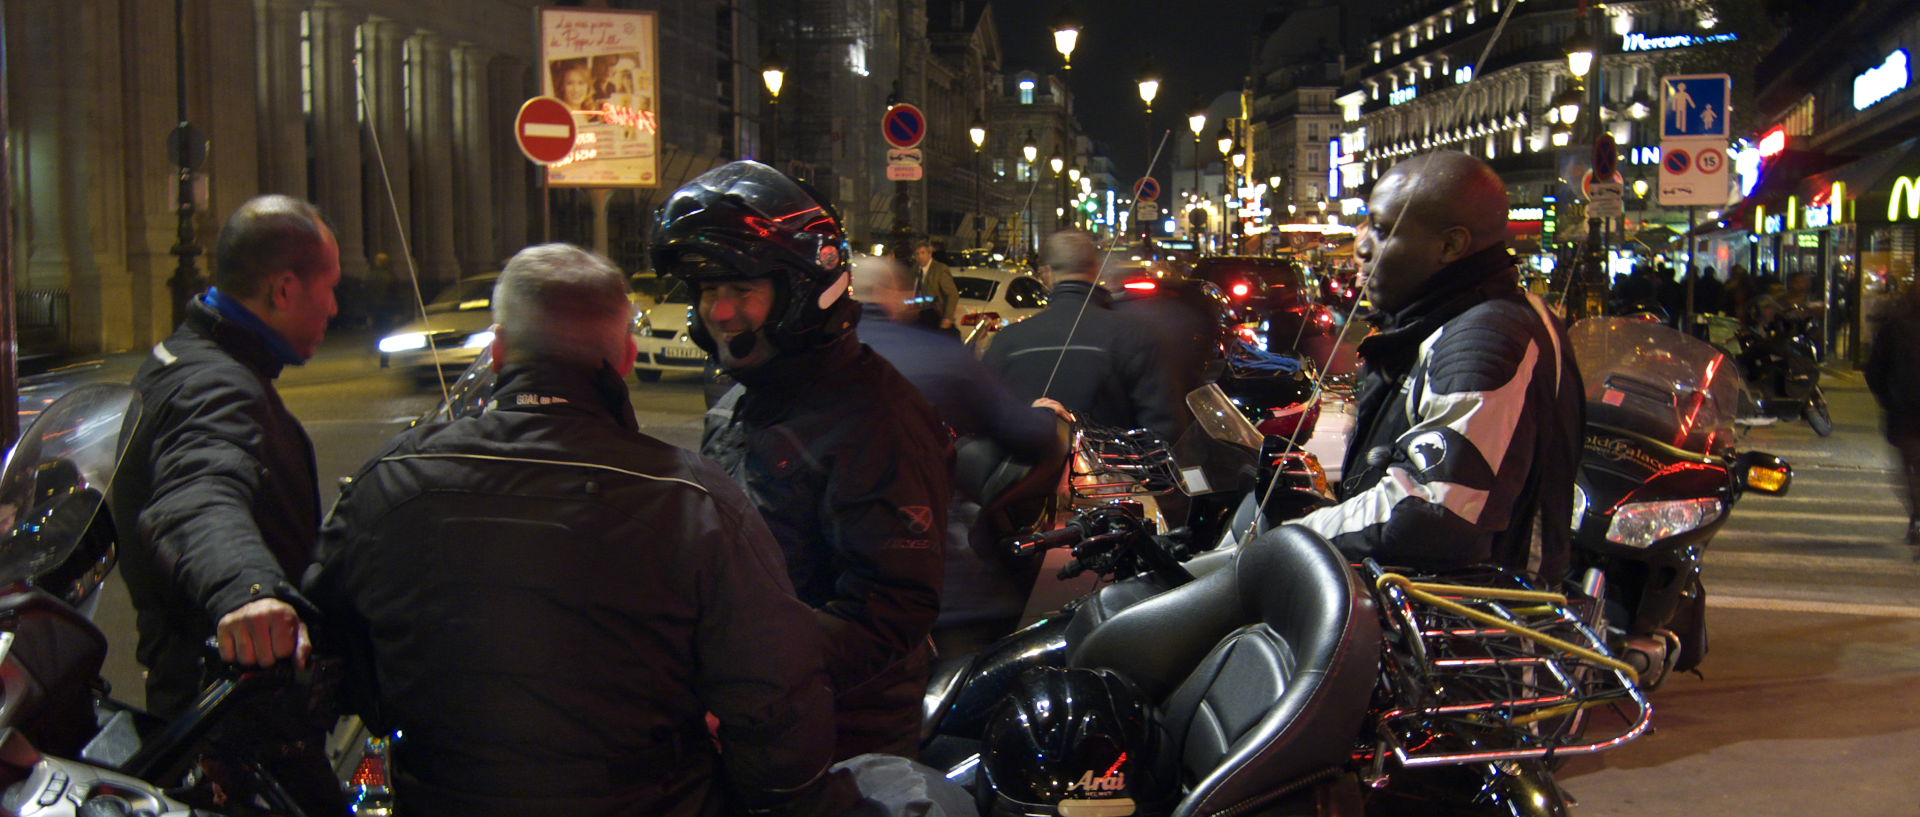 Photo des motos taxis, Paris, rue de Dunkerque.